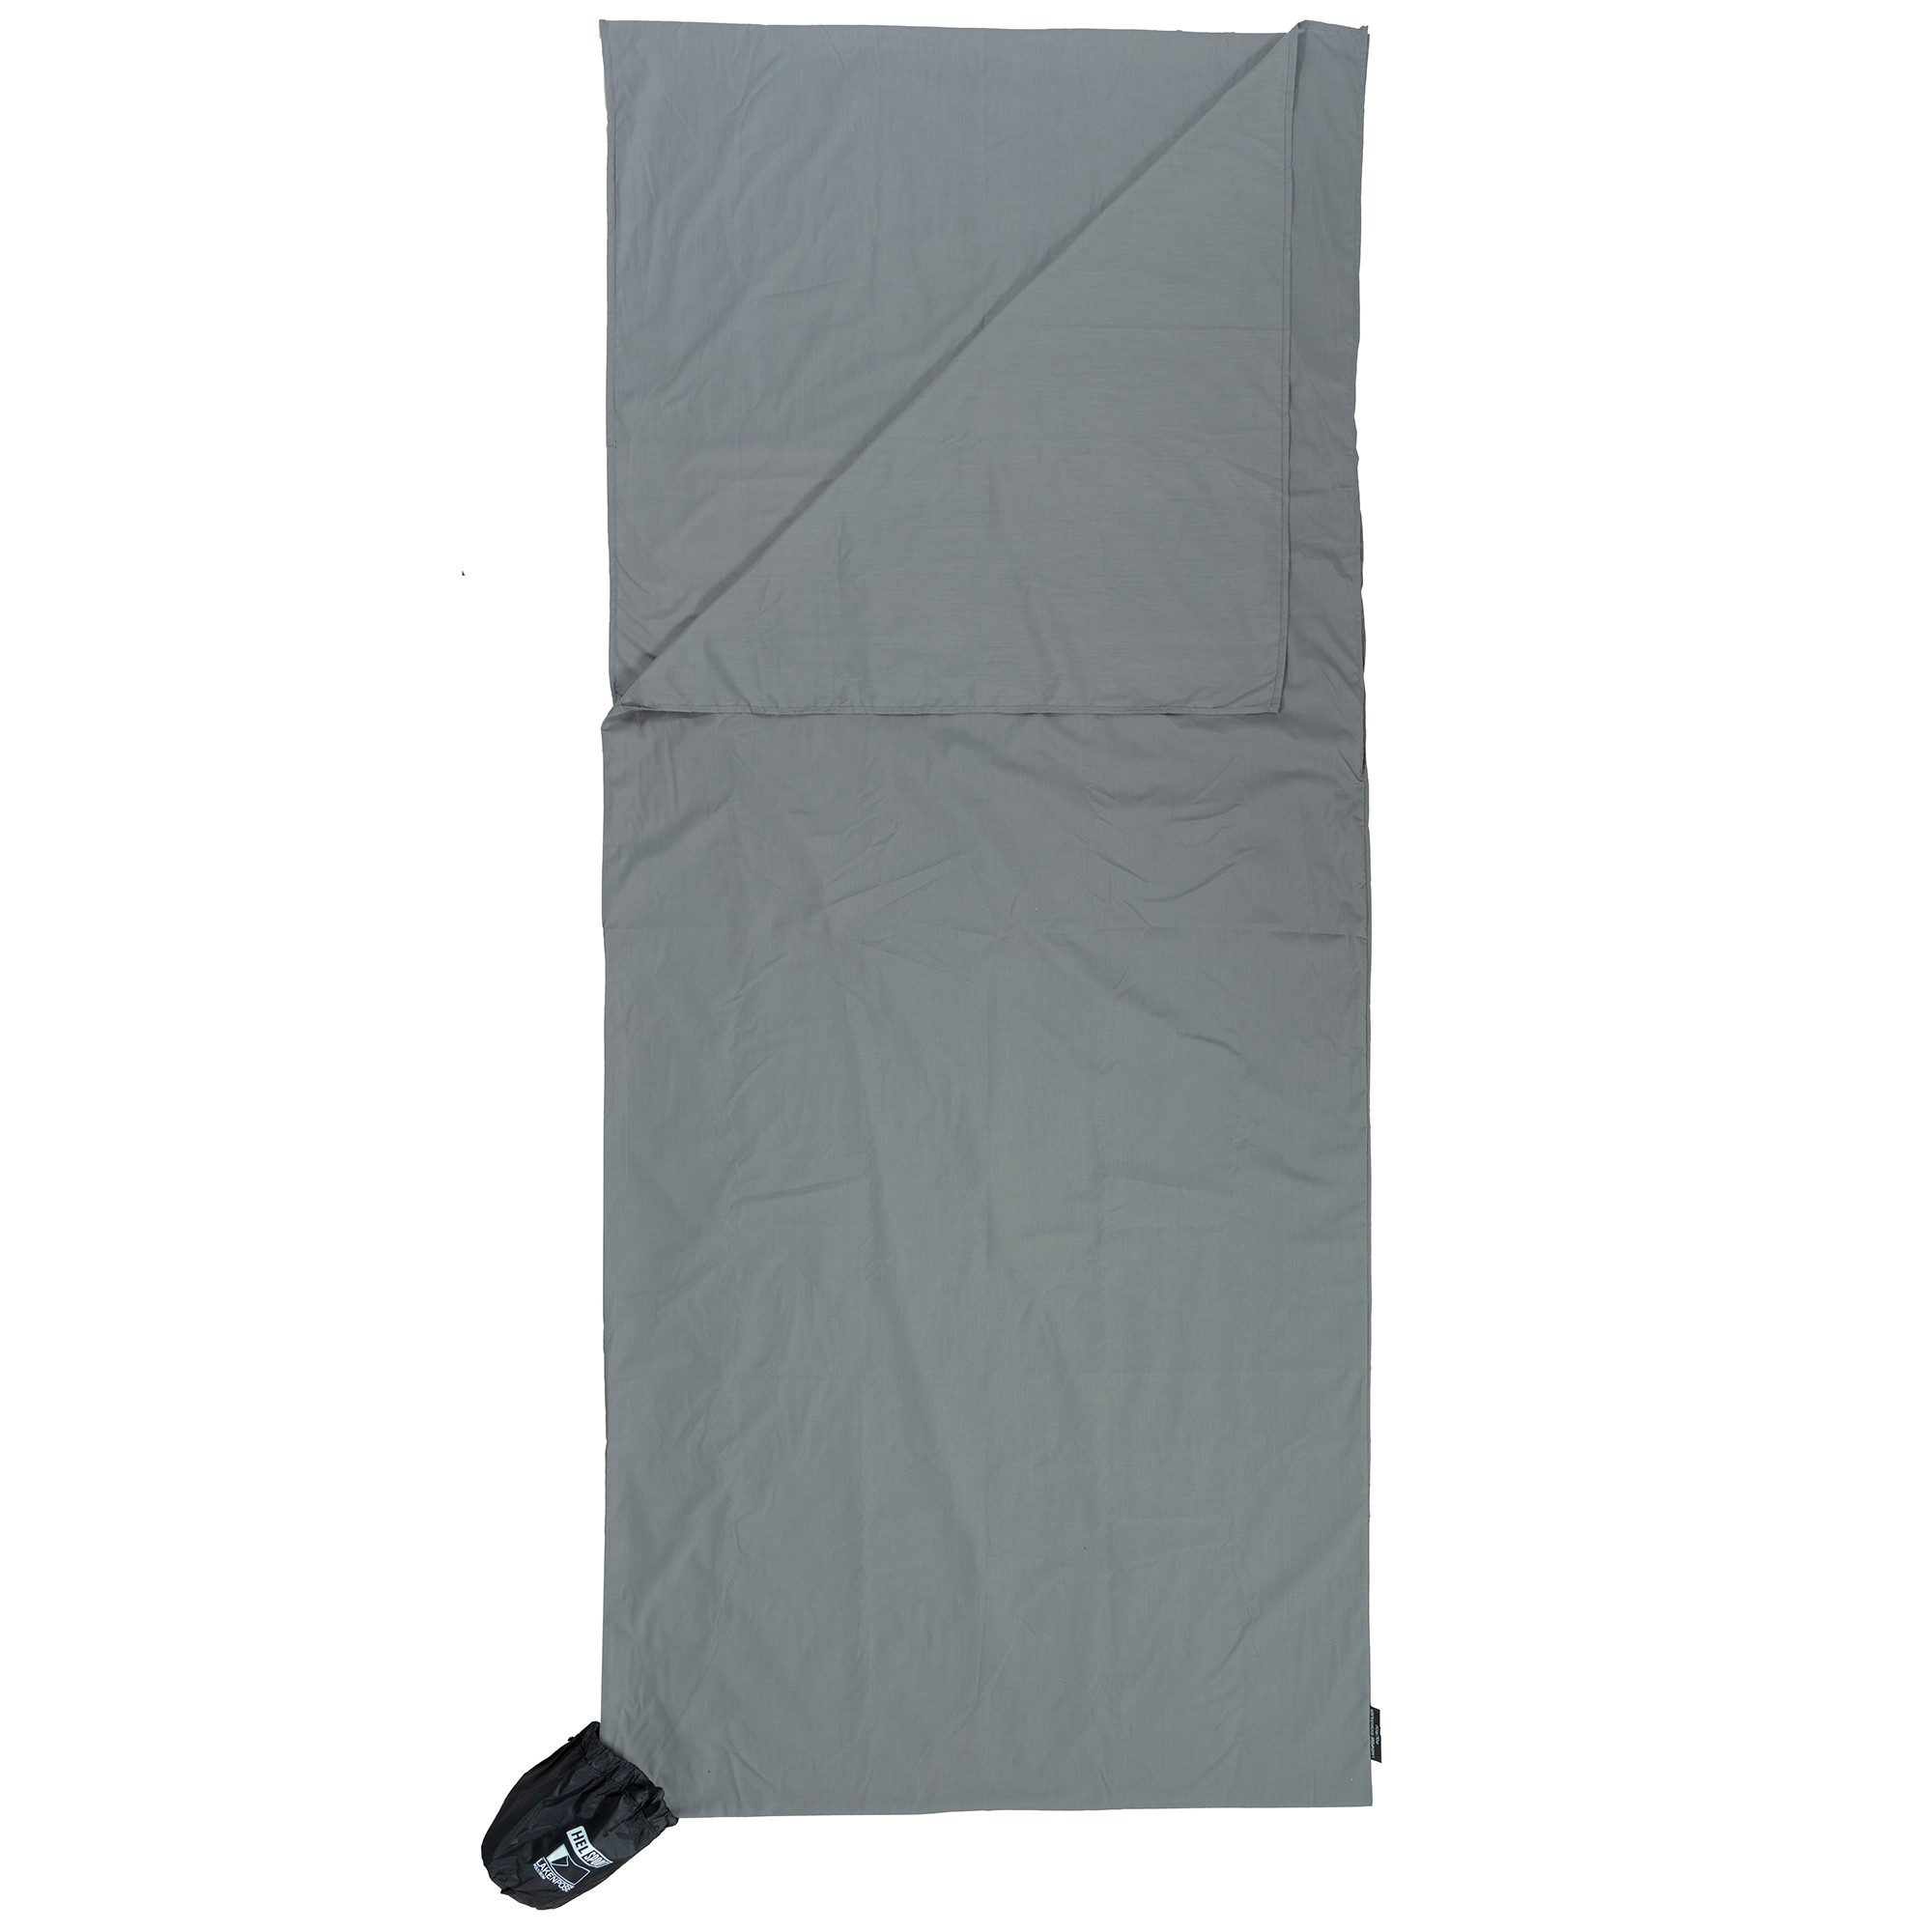 Helsport Sleeping Bag Liner Rectangular Poly Cotton grey